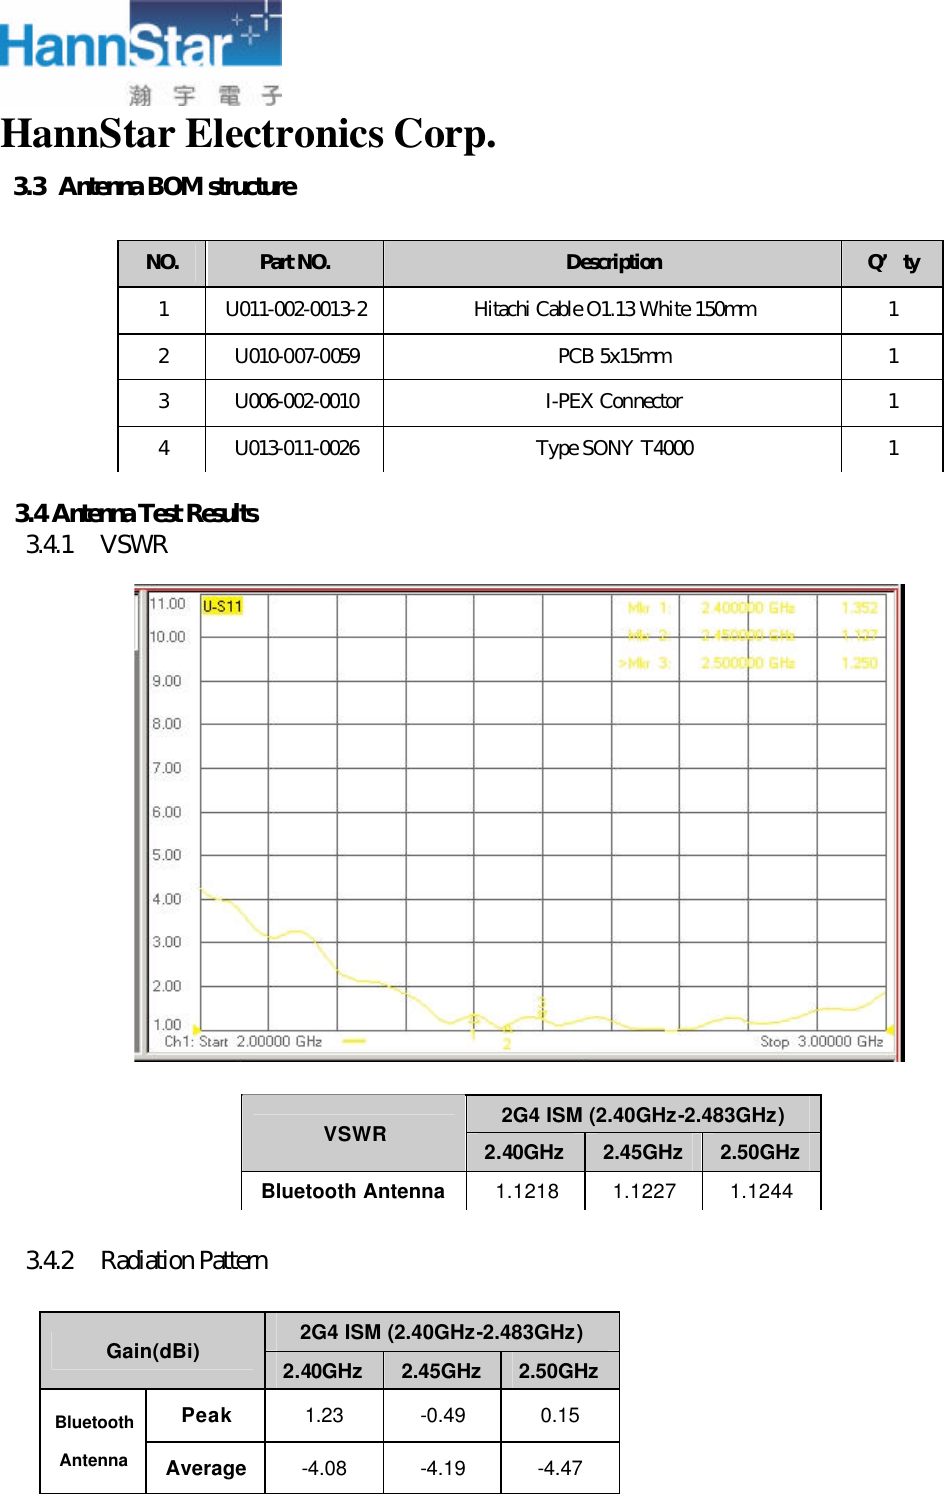  HannStar Electronics Corp.  3.3  Antenna BOM structure        3.4 Antenna Test Results 3.4.1 VSWR                        3.4.2 Radiation Pattern    2G4 ISM (2.40GHz-2.483GHz) Gain(dBi) 2.40GHz 2.45GHz 2.50GHz Peak 1.23 -0.49 0.15 Bluetooth Antenna Average -4.08 -4.19 -4.47 NO. Part NO. Description Q’ty 1 U011-002-0013-2 Hitachi Cable O1.13 White 150mm 1 2 U010-007-0059 PCB 5x15mm 1 3 U006-002-0010 I-PEX Connector 1 4 U013-011-0026 Type SONY T4000 1 2G4 ISM (2.40GHz-2.483GHz) VSWR 2.40GHz 2.45GHz 2.50GHz Bluetooth Antenna 1.1218 1.1227 1.1244 